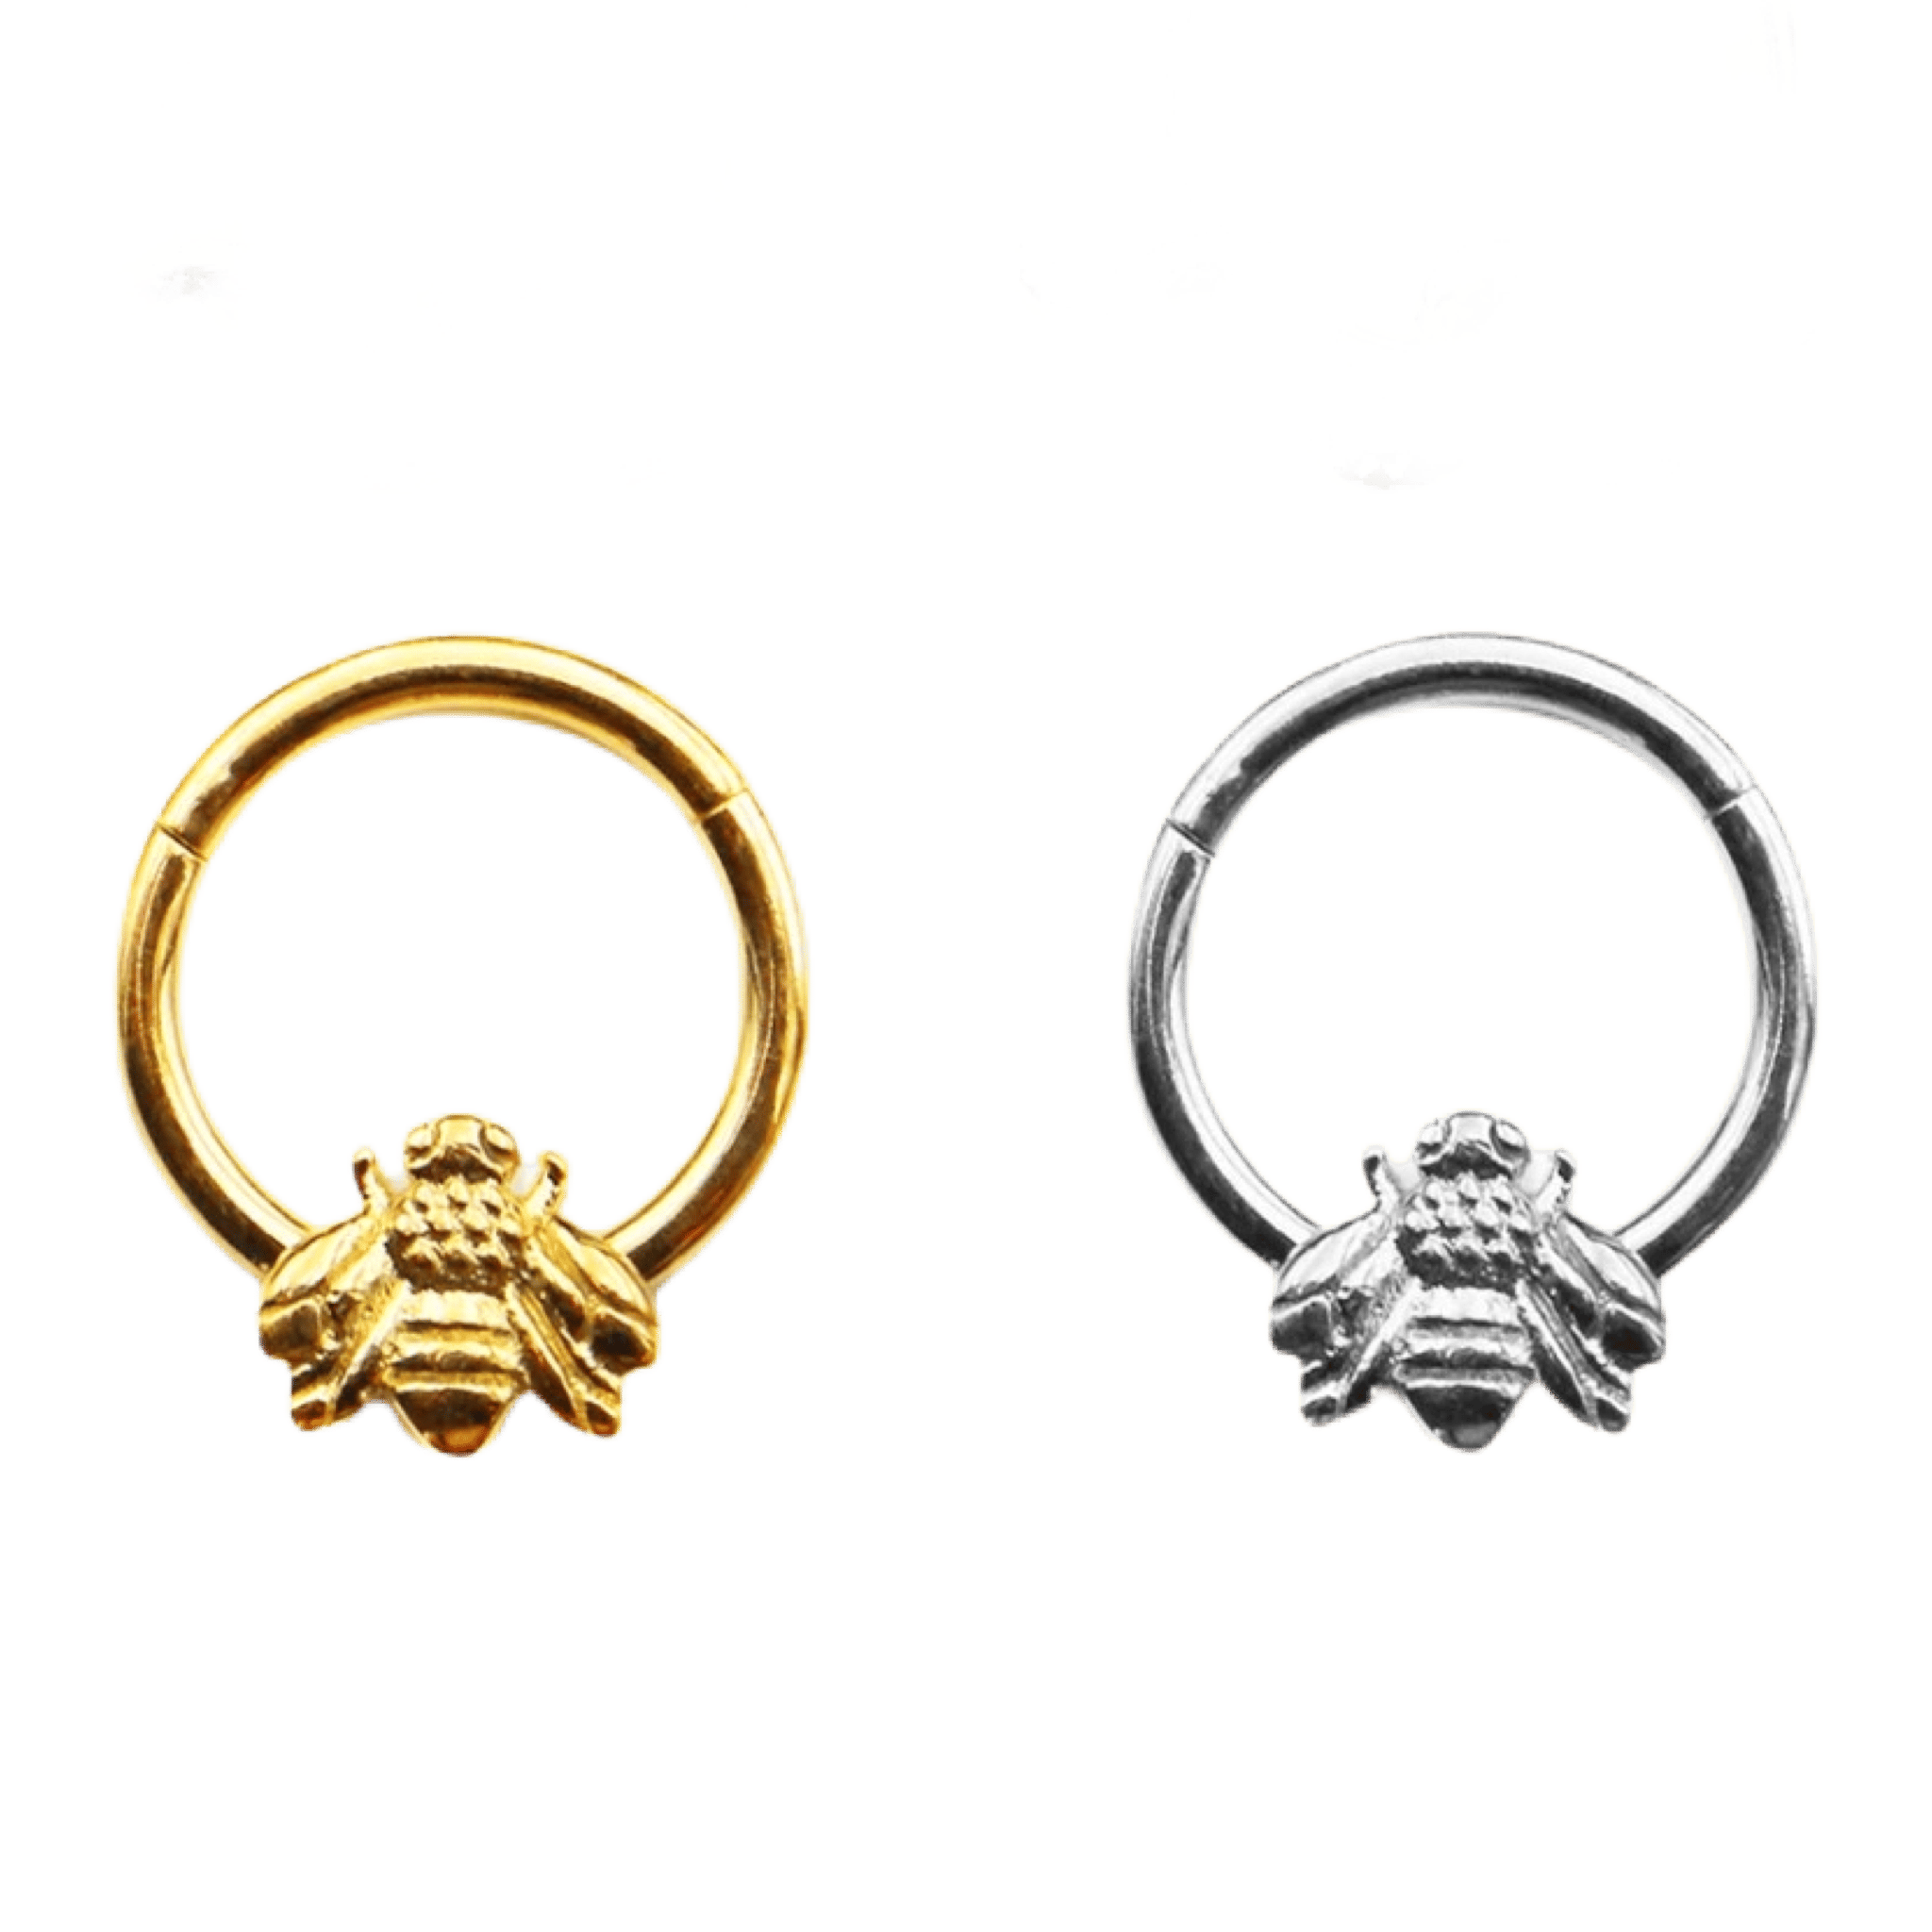 stainless steel bee hinged hoop for septum and ear piercing jewelry